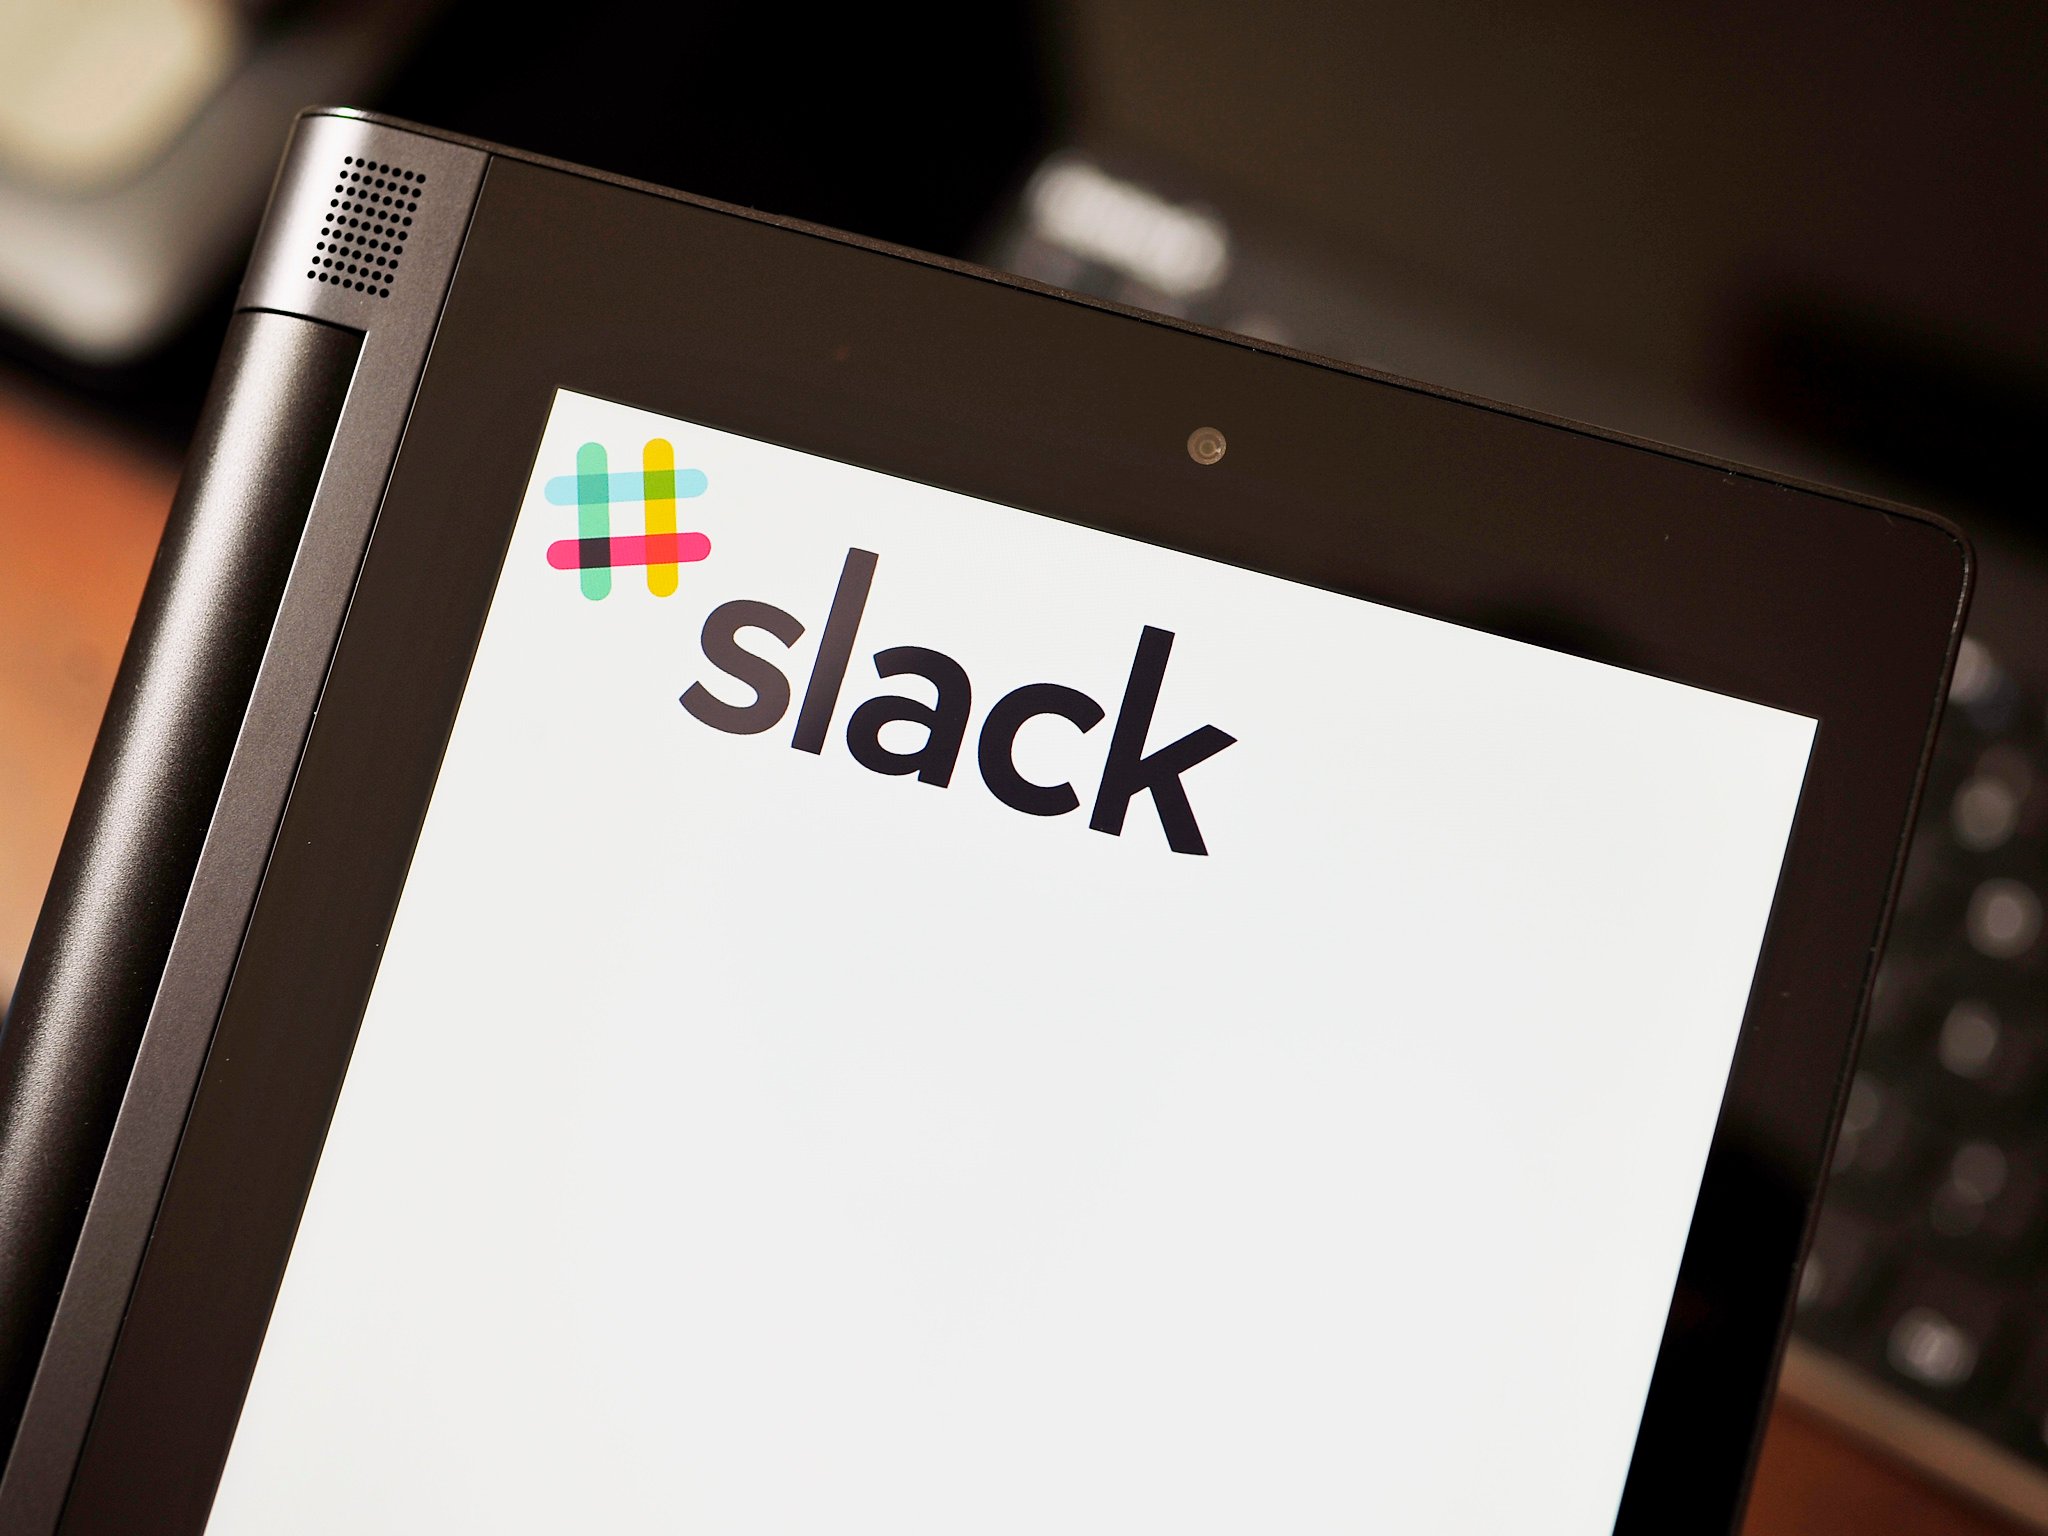 slack-logo-tablet.jpg